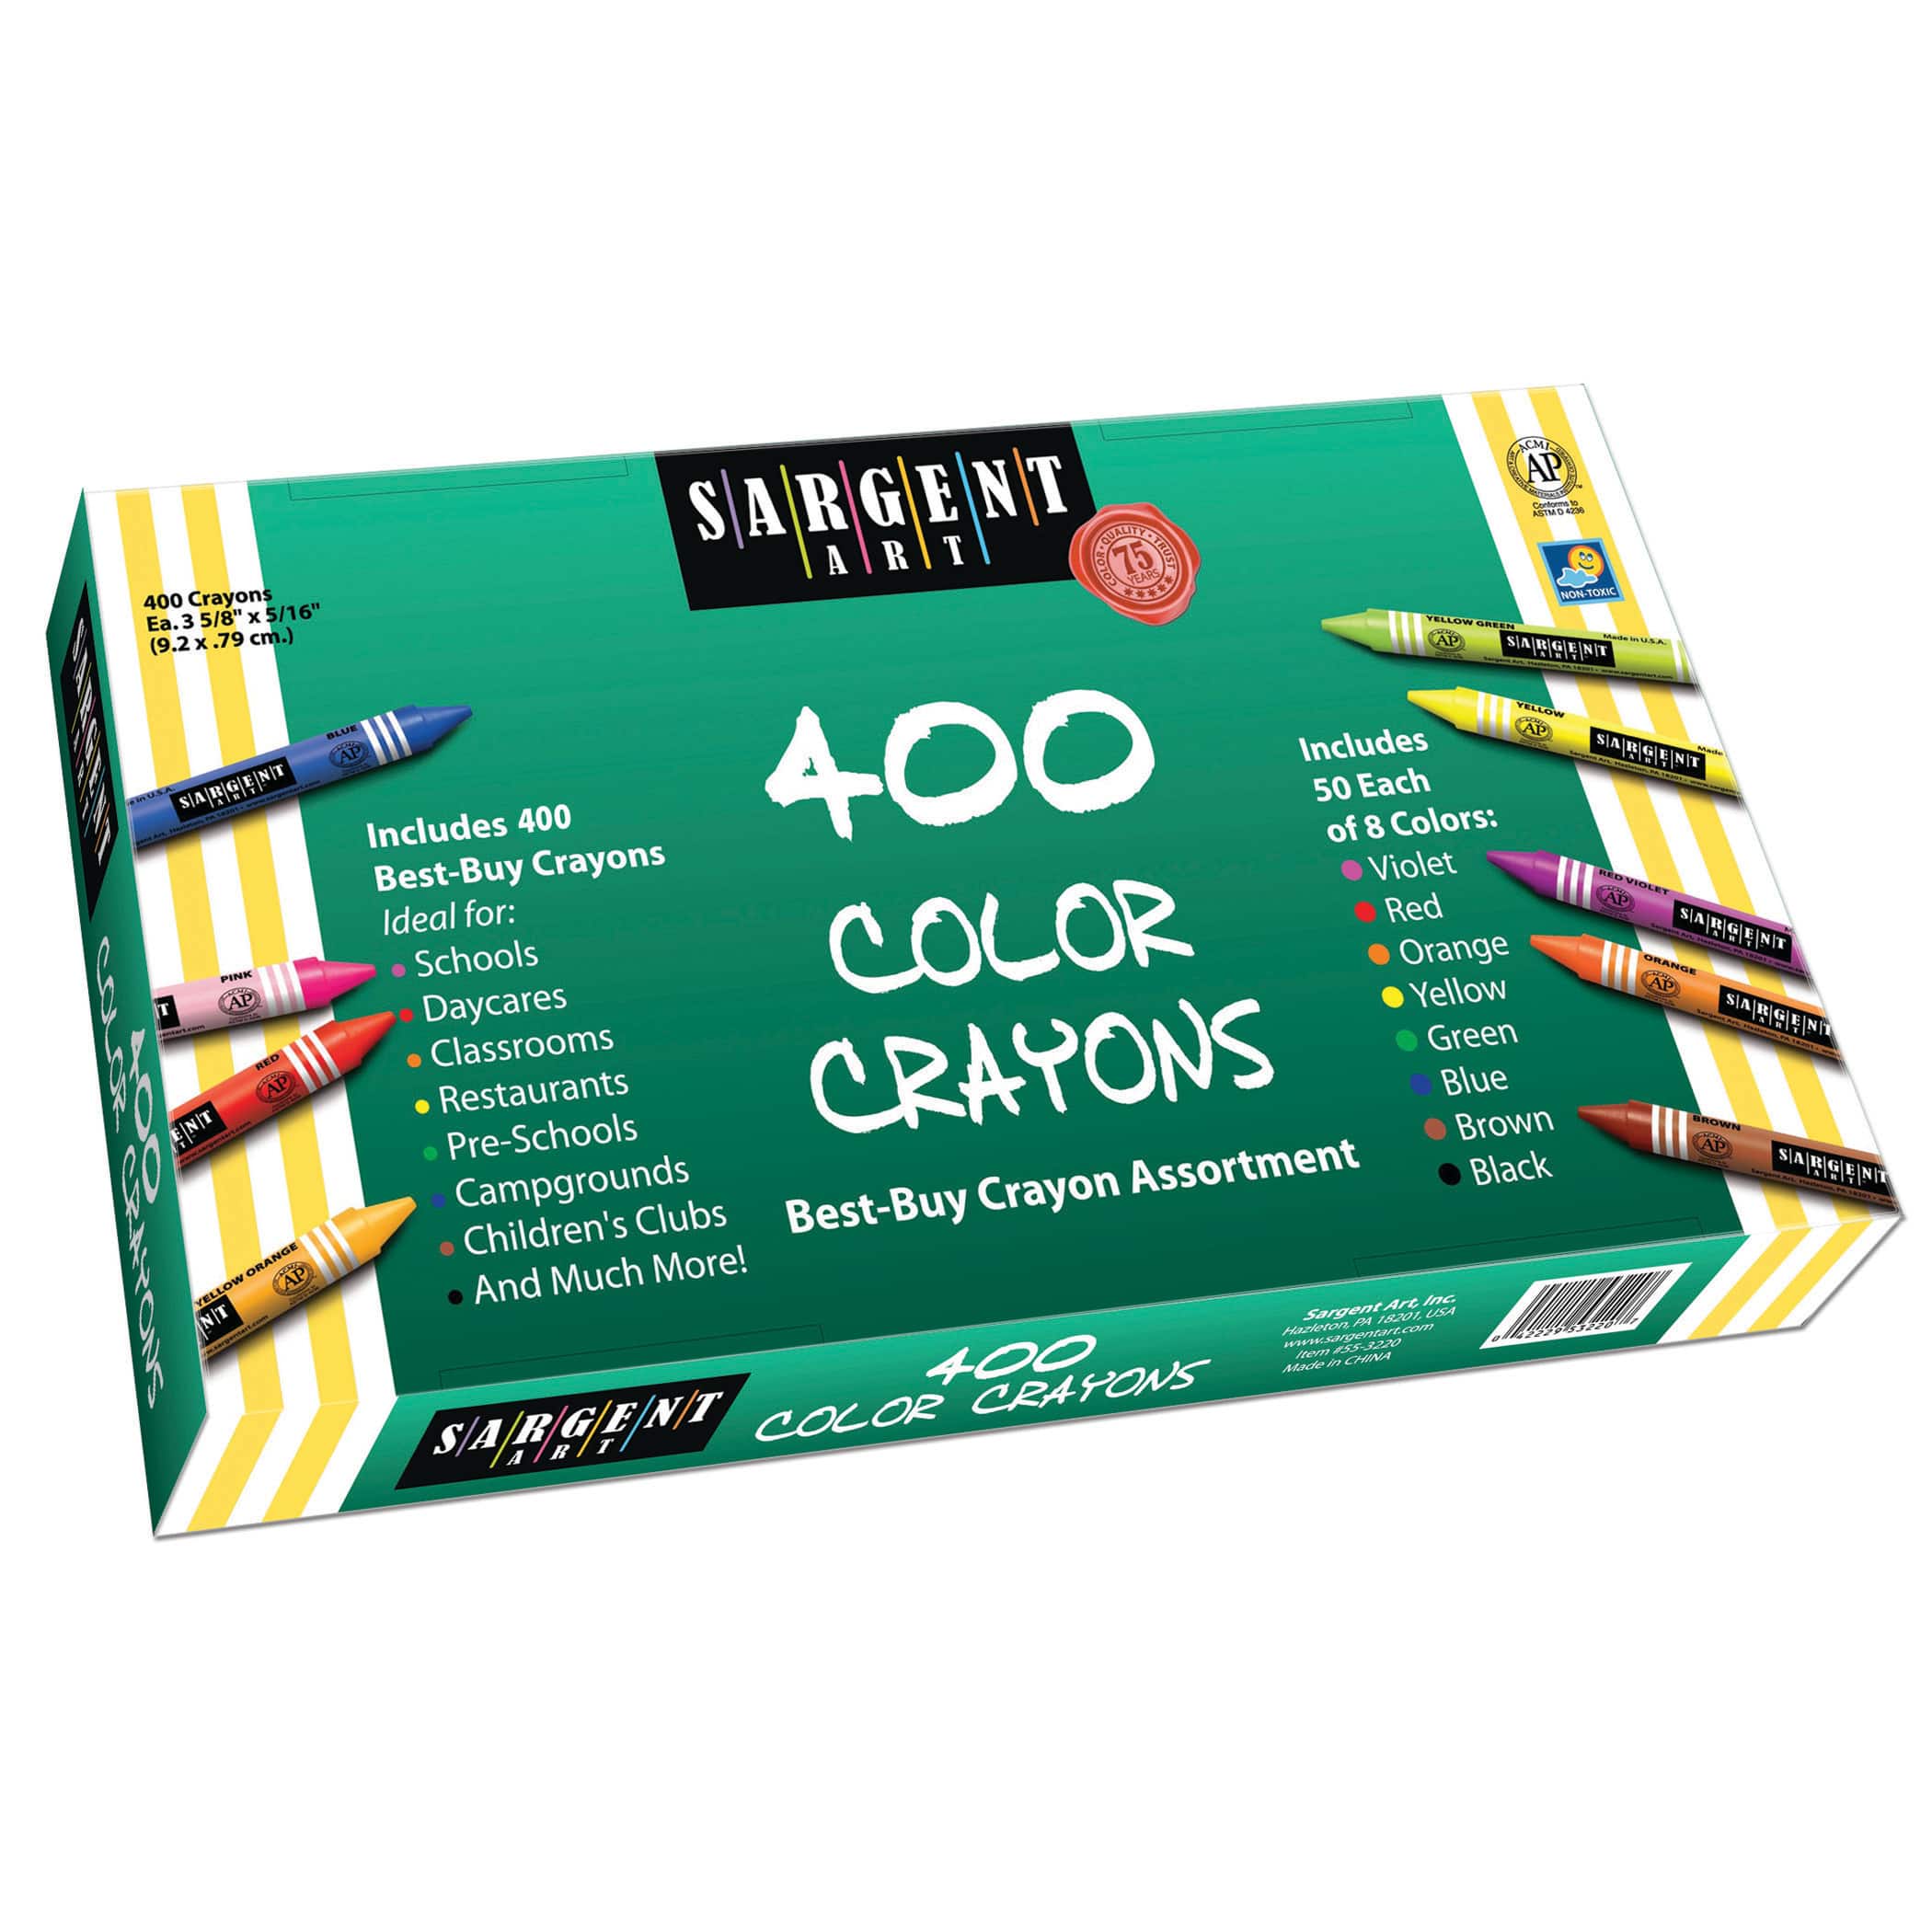 4 Packs: 400 ct. (1,600 total) Sargent Art® Best Buy Crayon Assortment